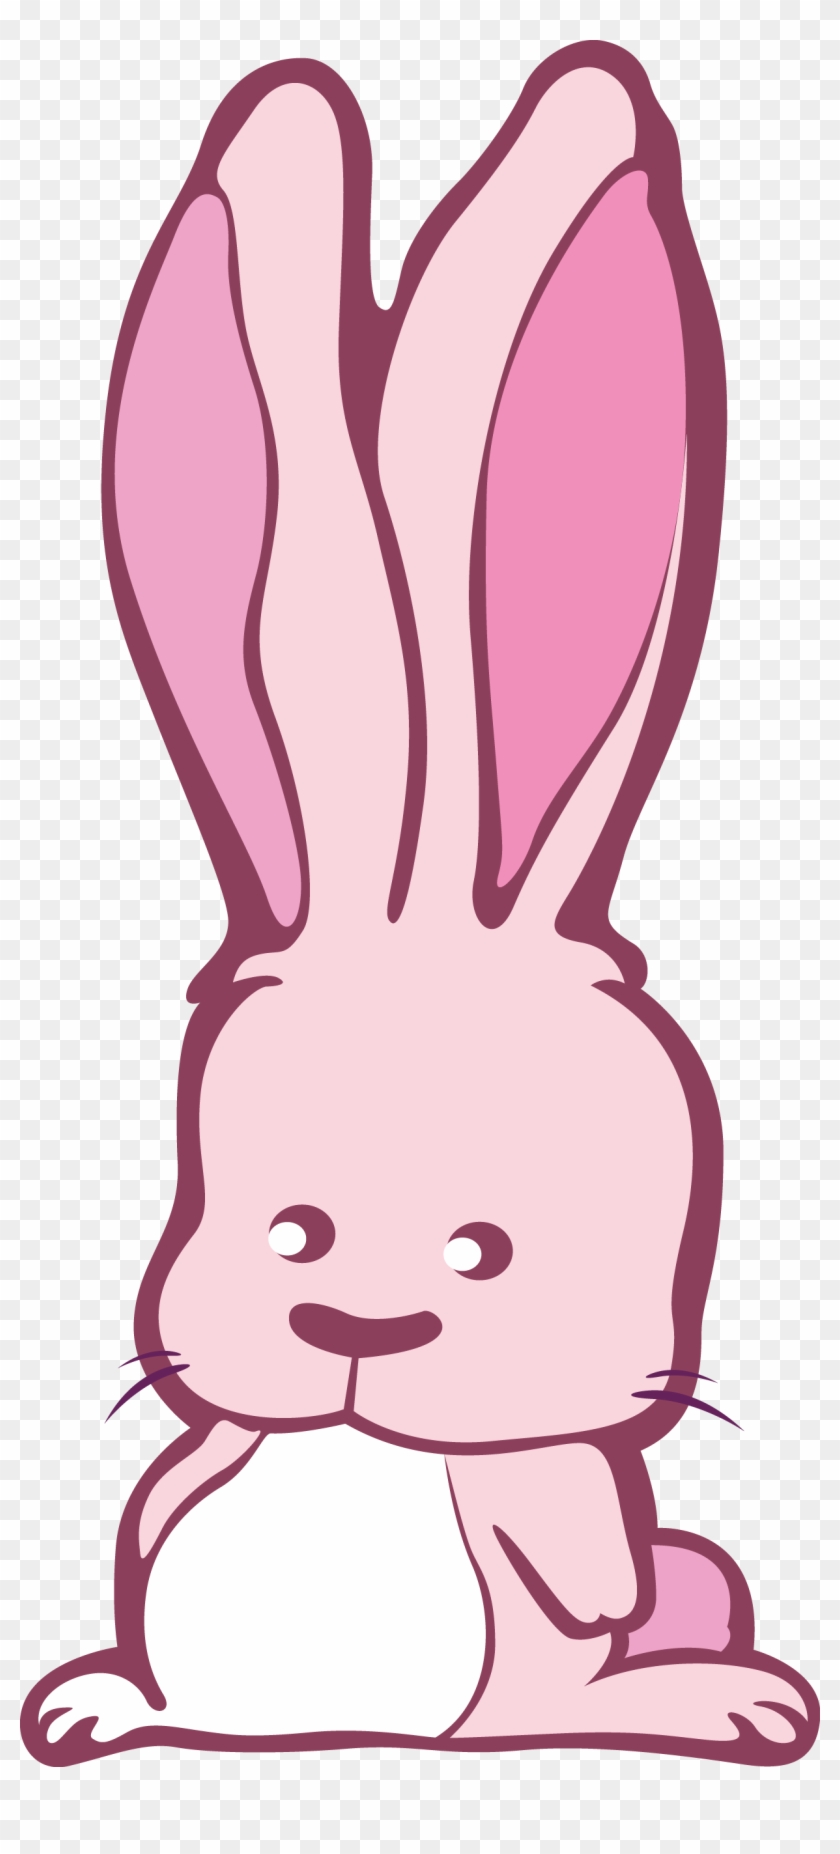 Easter Bunny Rabbit Clip Art - Easter Bunny Rabbit Clip Art #733409